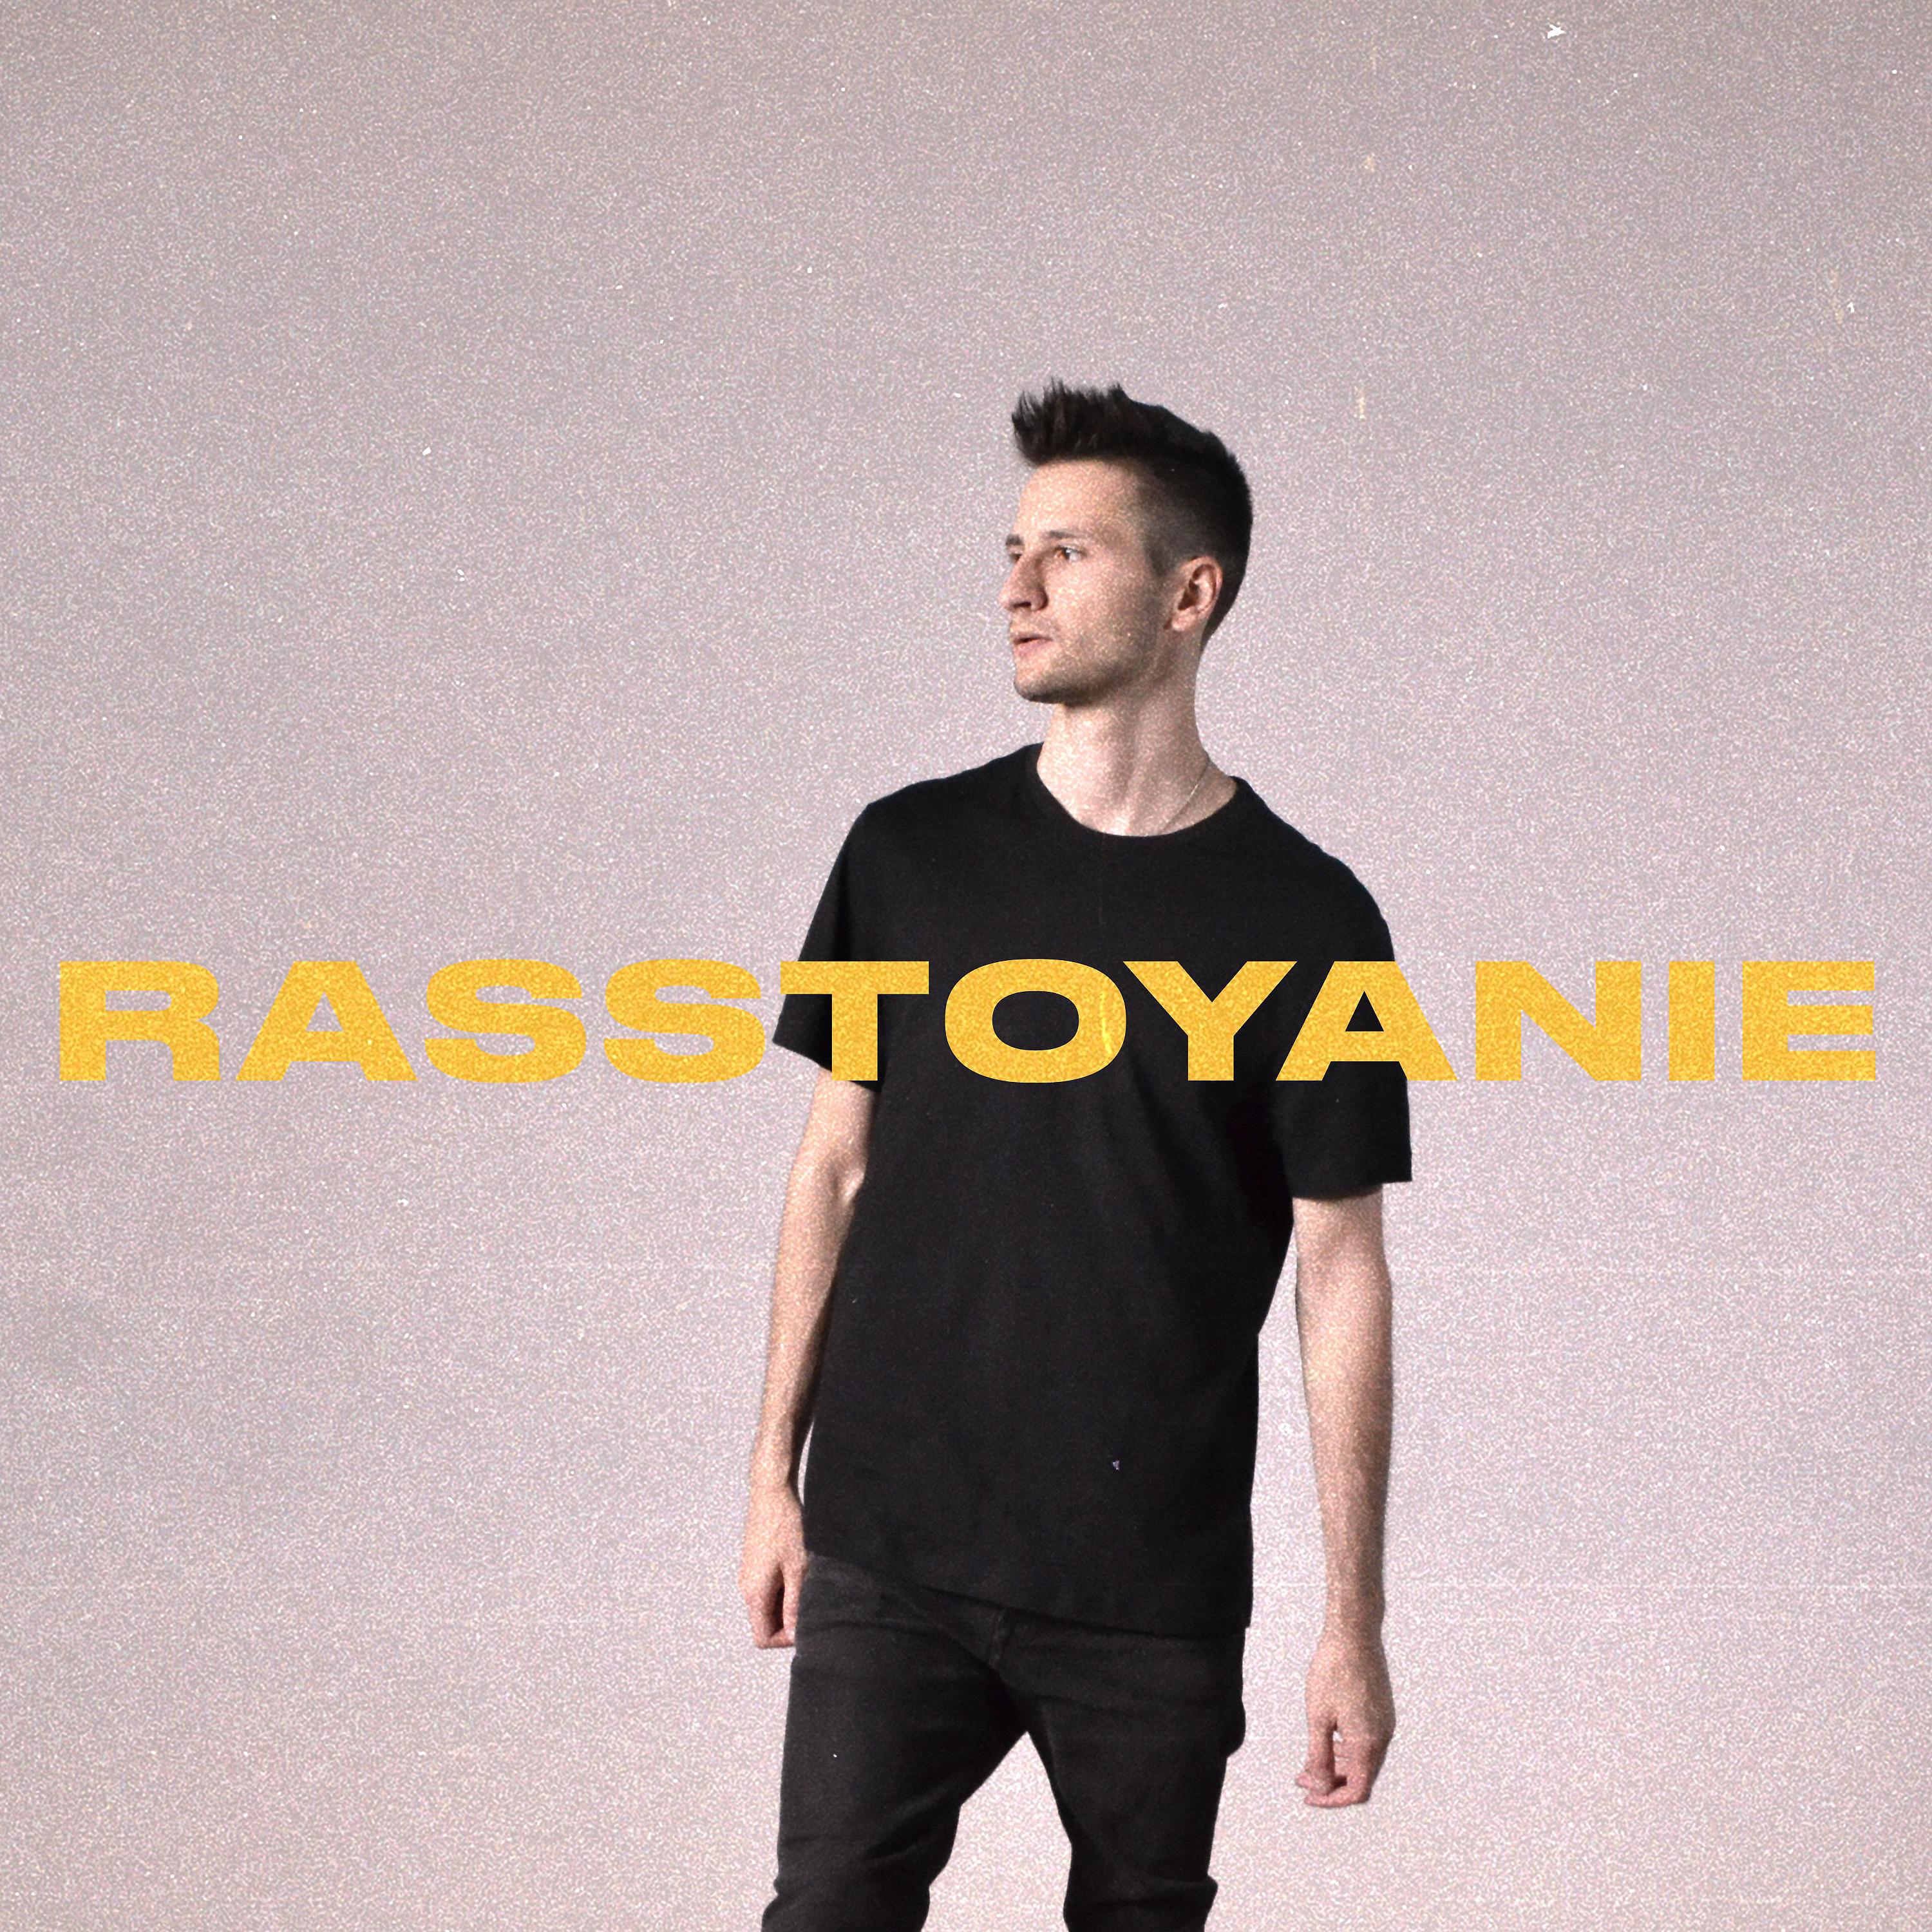 Постер альбома Rasstoyanie